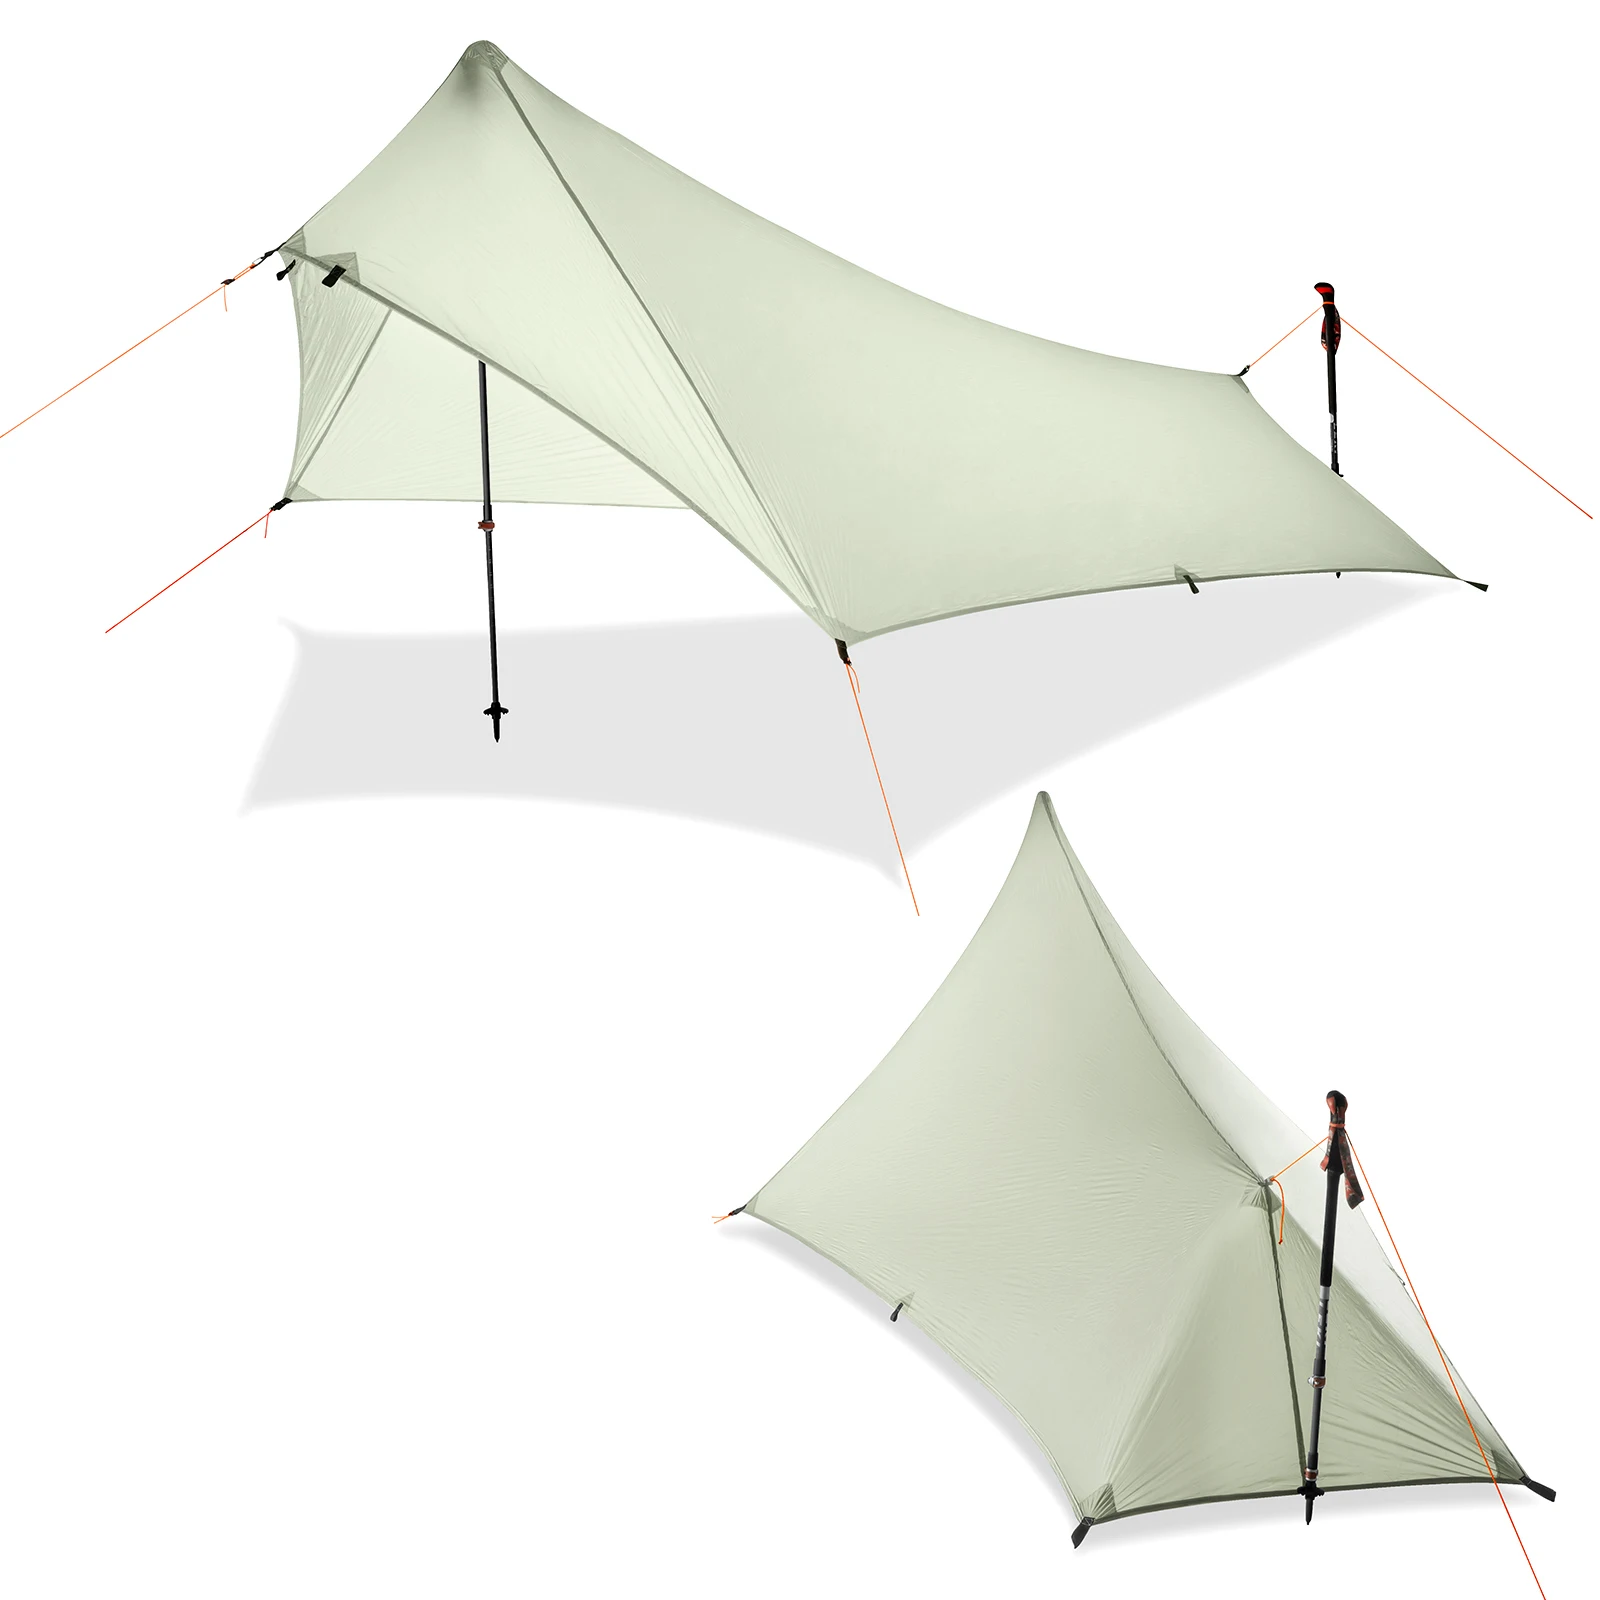 Ultraleve 310g flysheet tenda impermeável 20d dupla face silicone revestimento de acampamento de náilon abrigo dossel ly ly leve lona